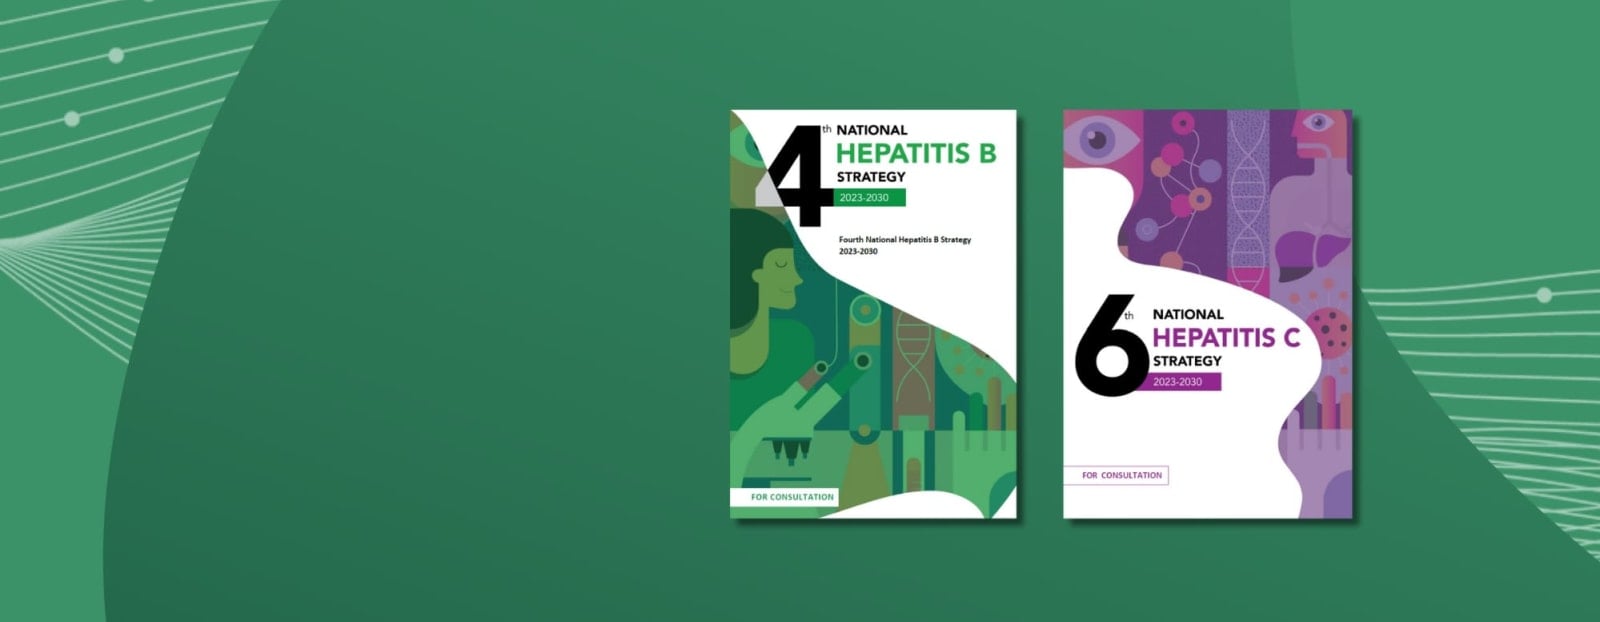 National Hepatitis B Strategy 2023-2030 and the National Hepatitis C Strategy 2023-2030